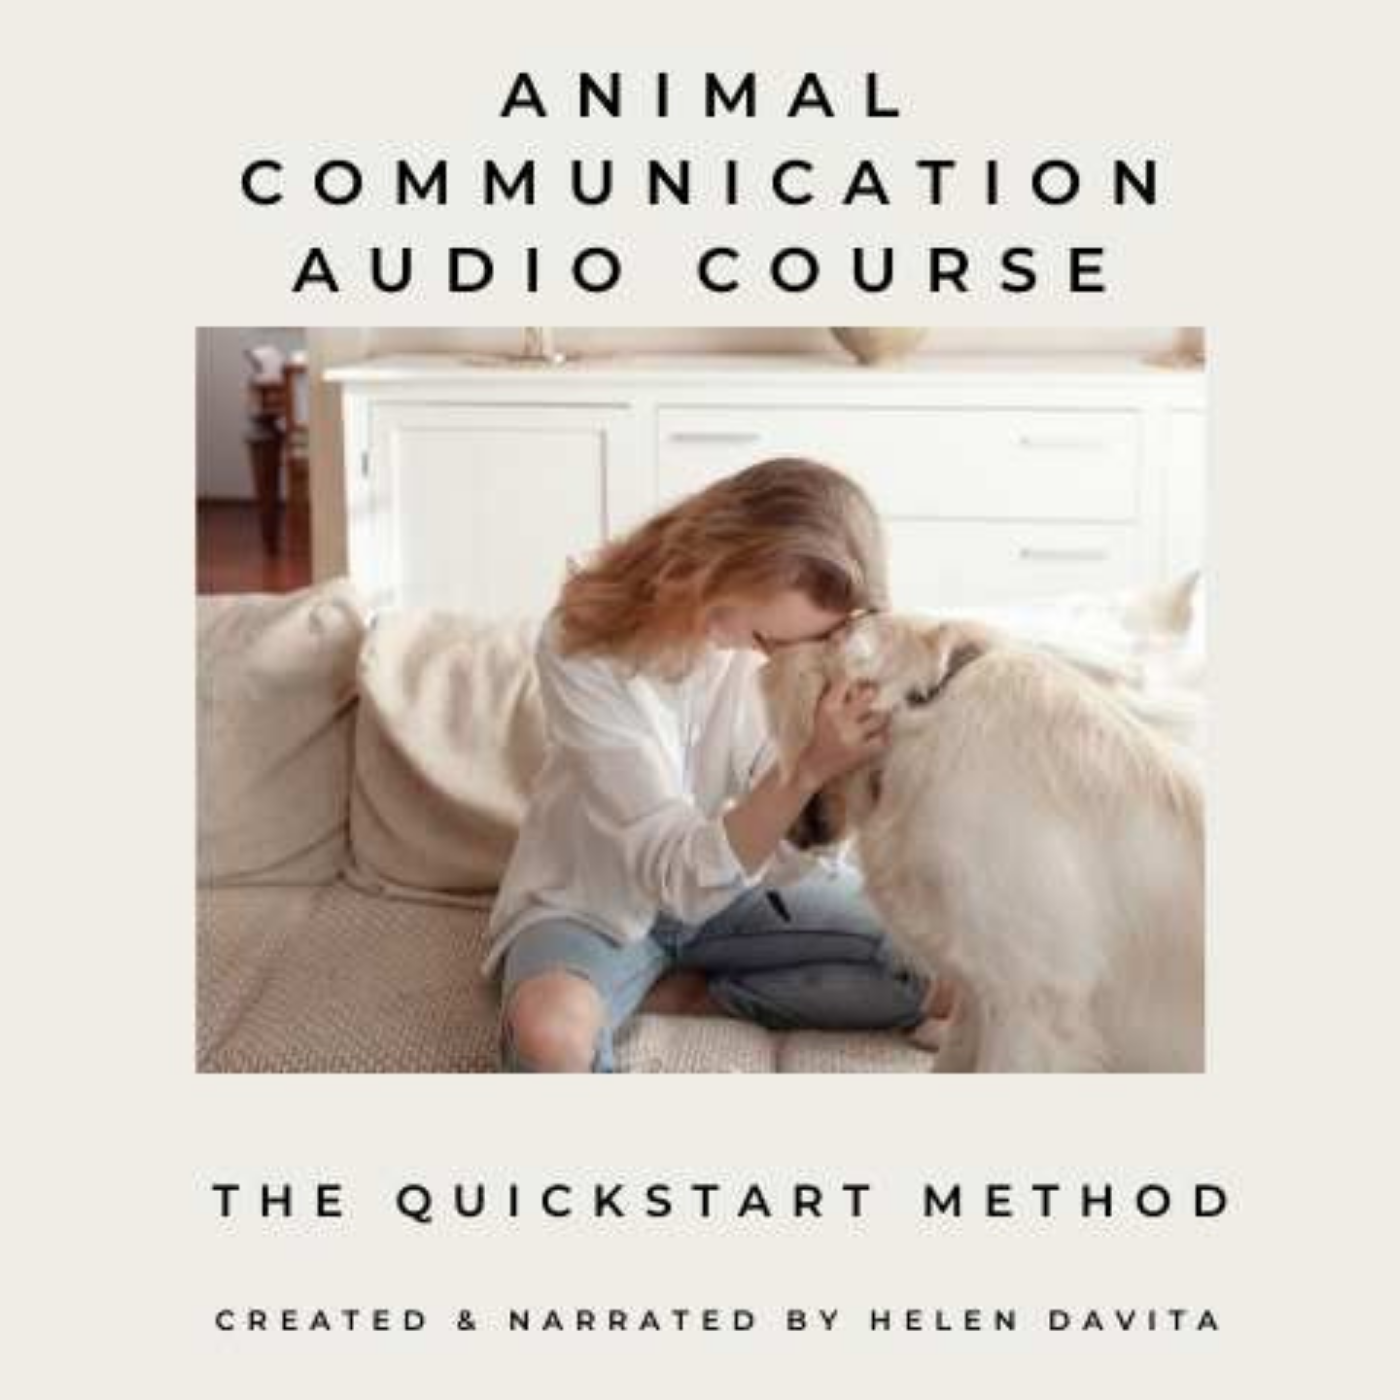 The Animal Communication Audio Courses